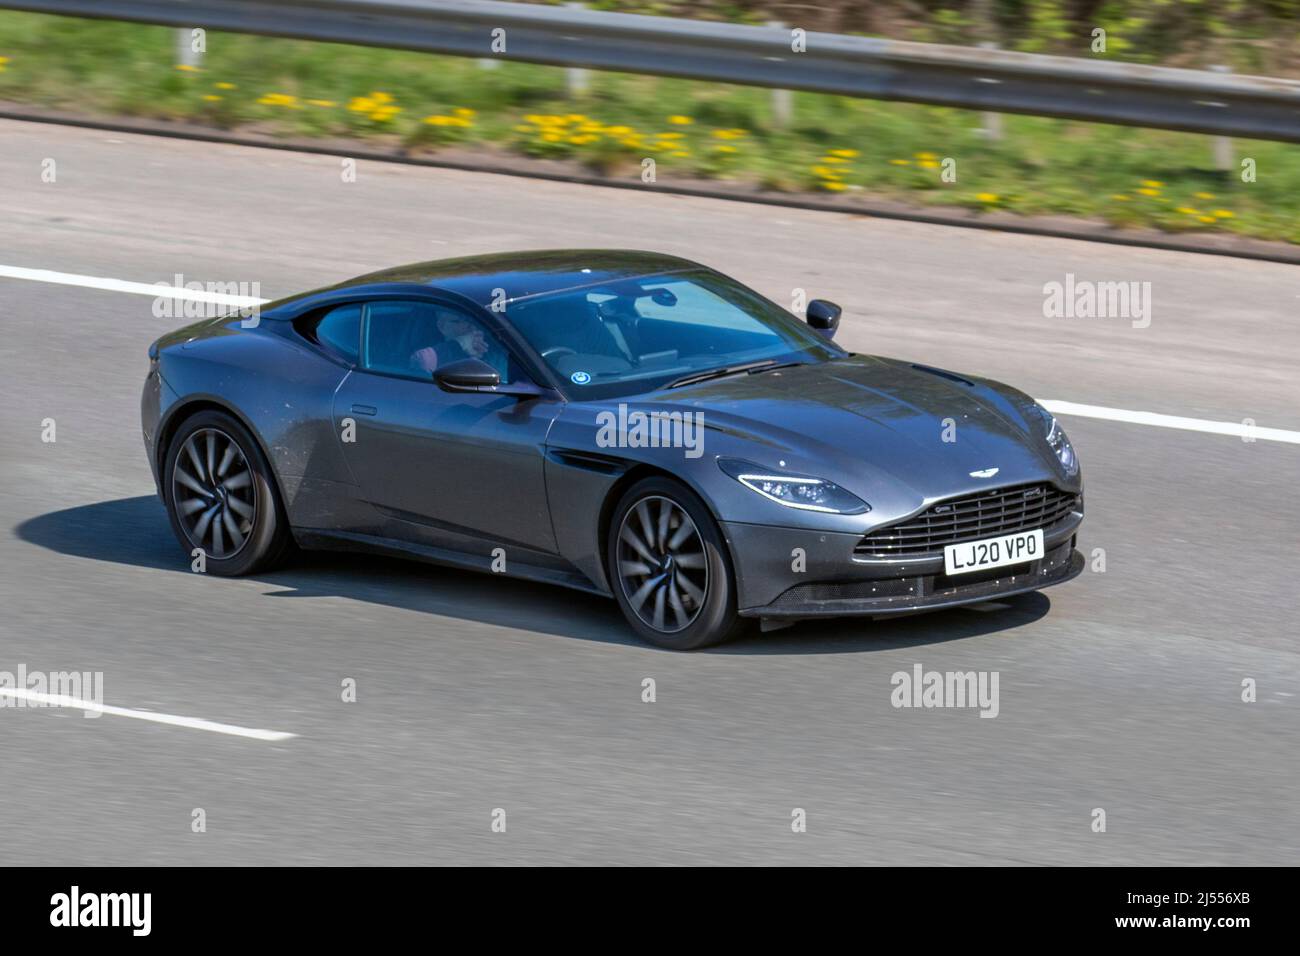 2020 Aston Martin Db11 V8 Auto Touchtronic Auto benzina coupé; guida sull'autostrada M61 UK Foto Stock